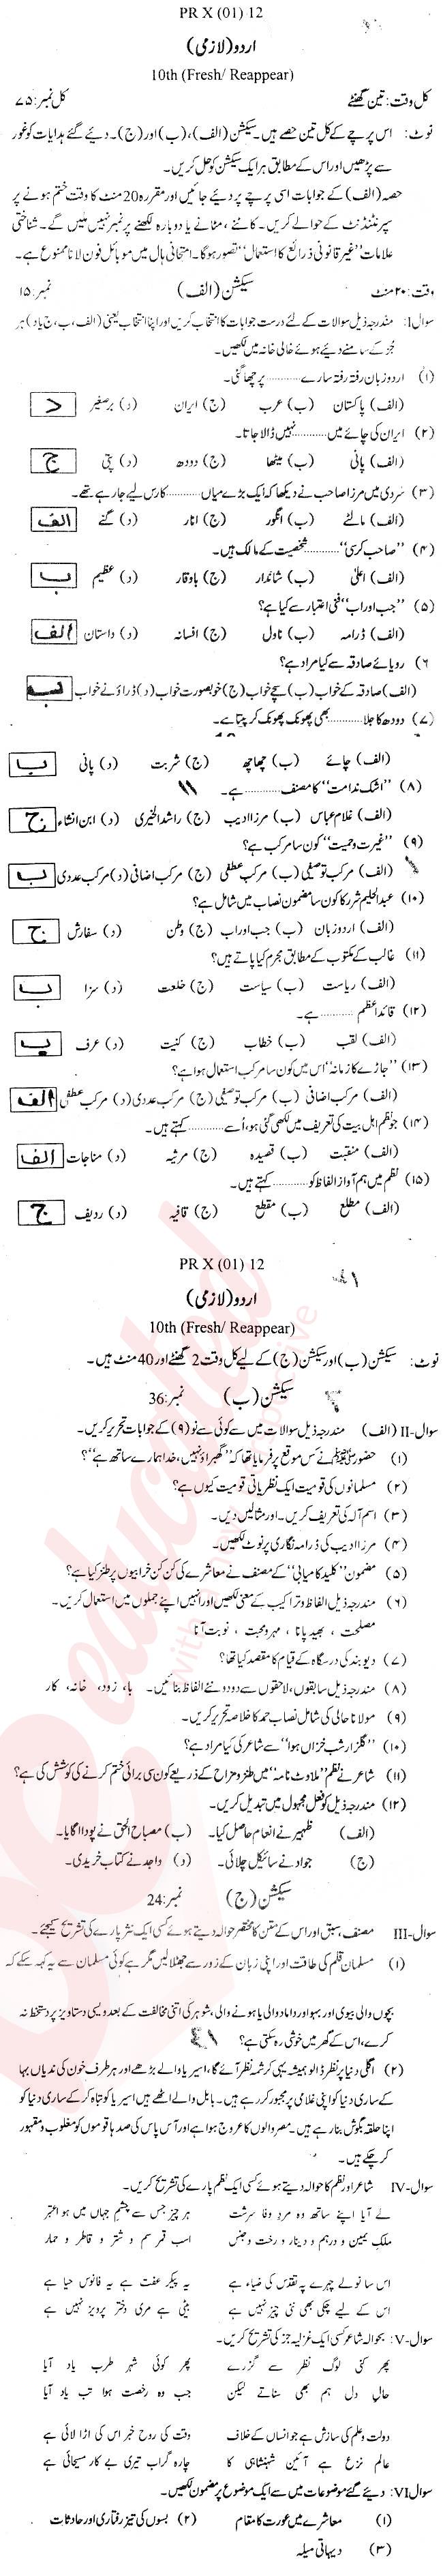 Urdu 10th Urdu Medium Past Paper Group 1 BISE Bannu 2012